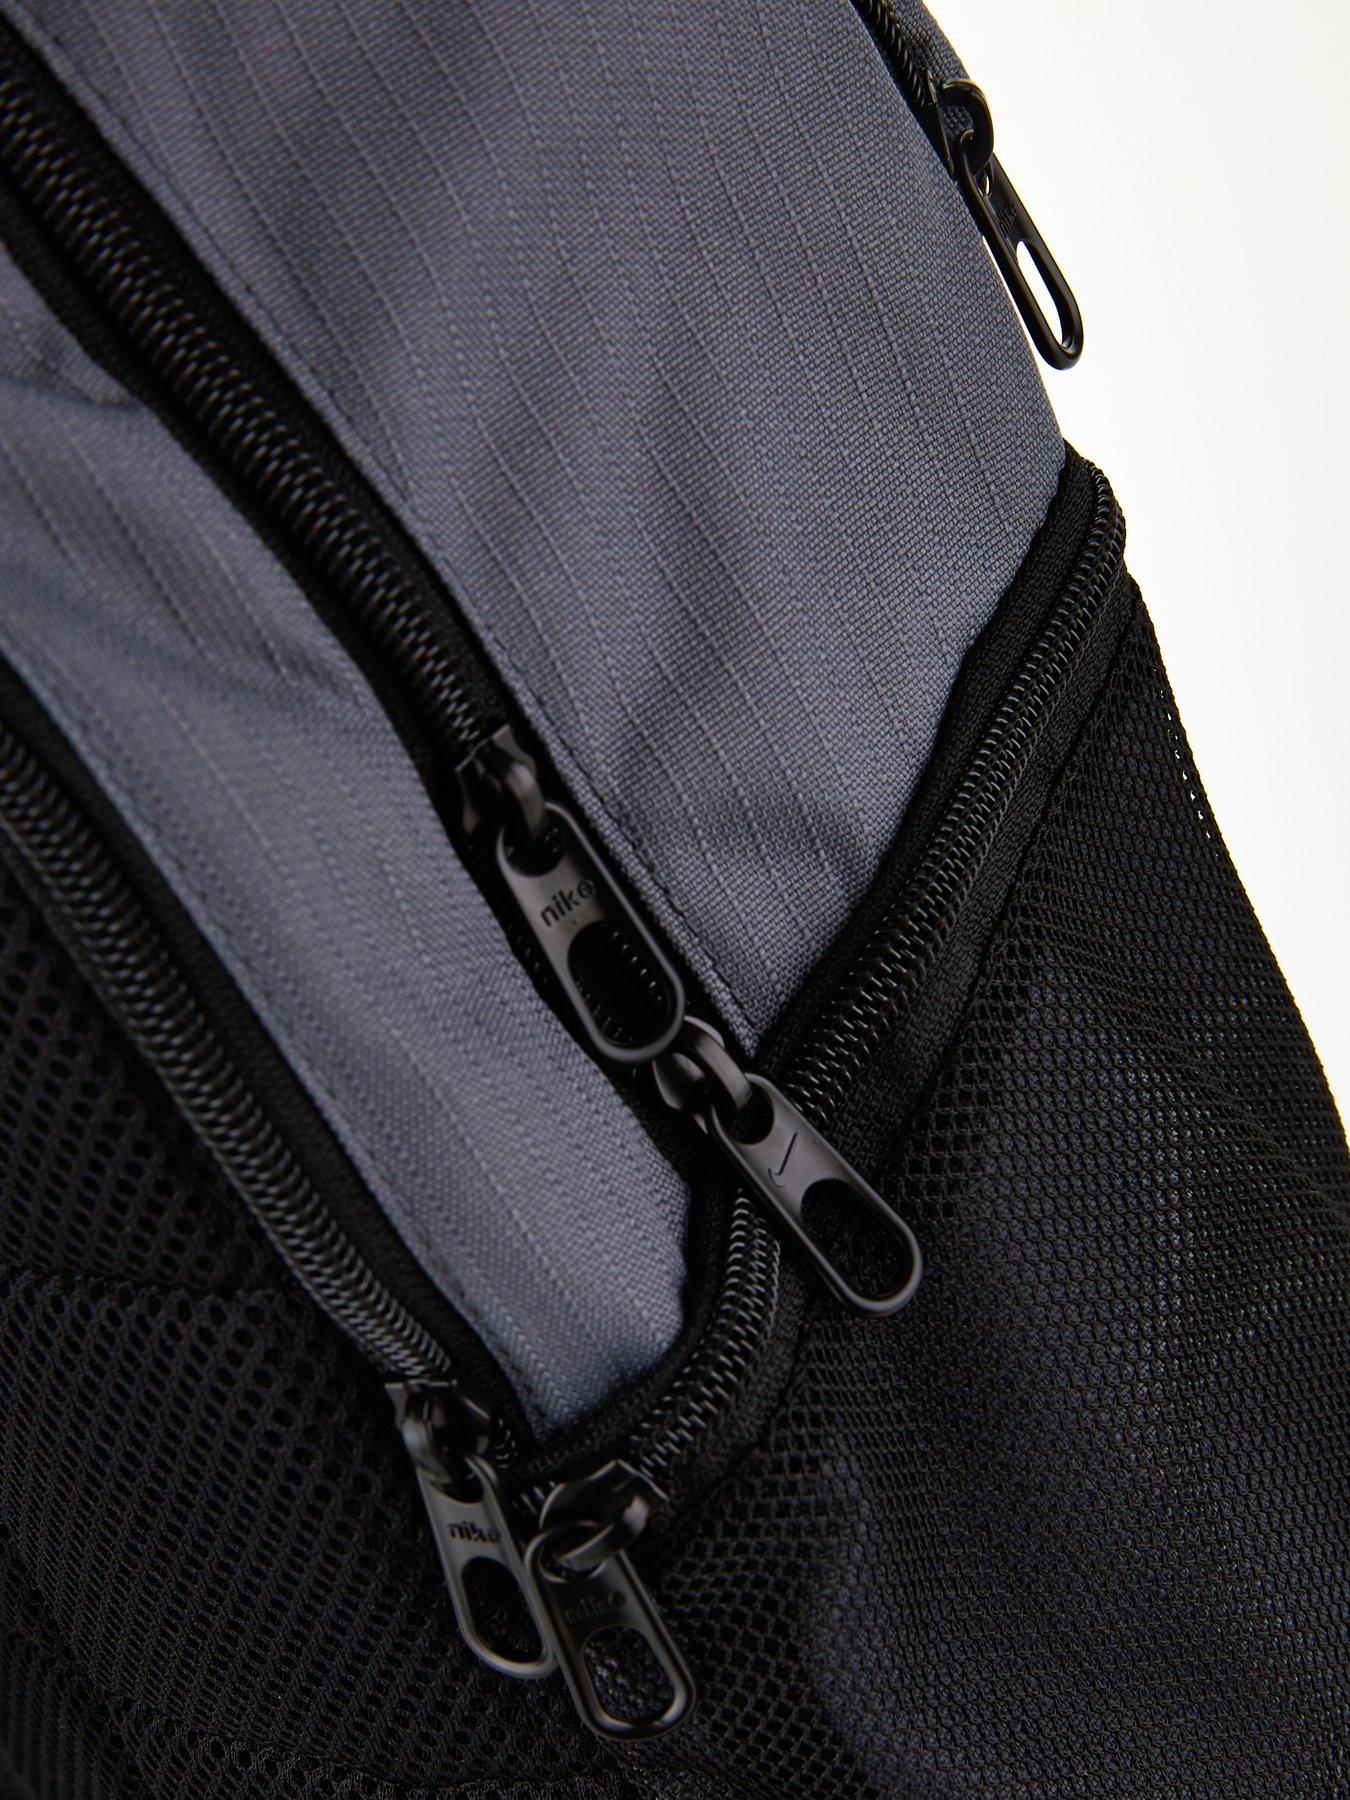 Accessories Training Brasilia Medium Backpack - Black